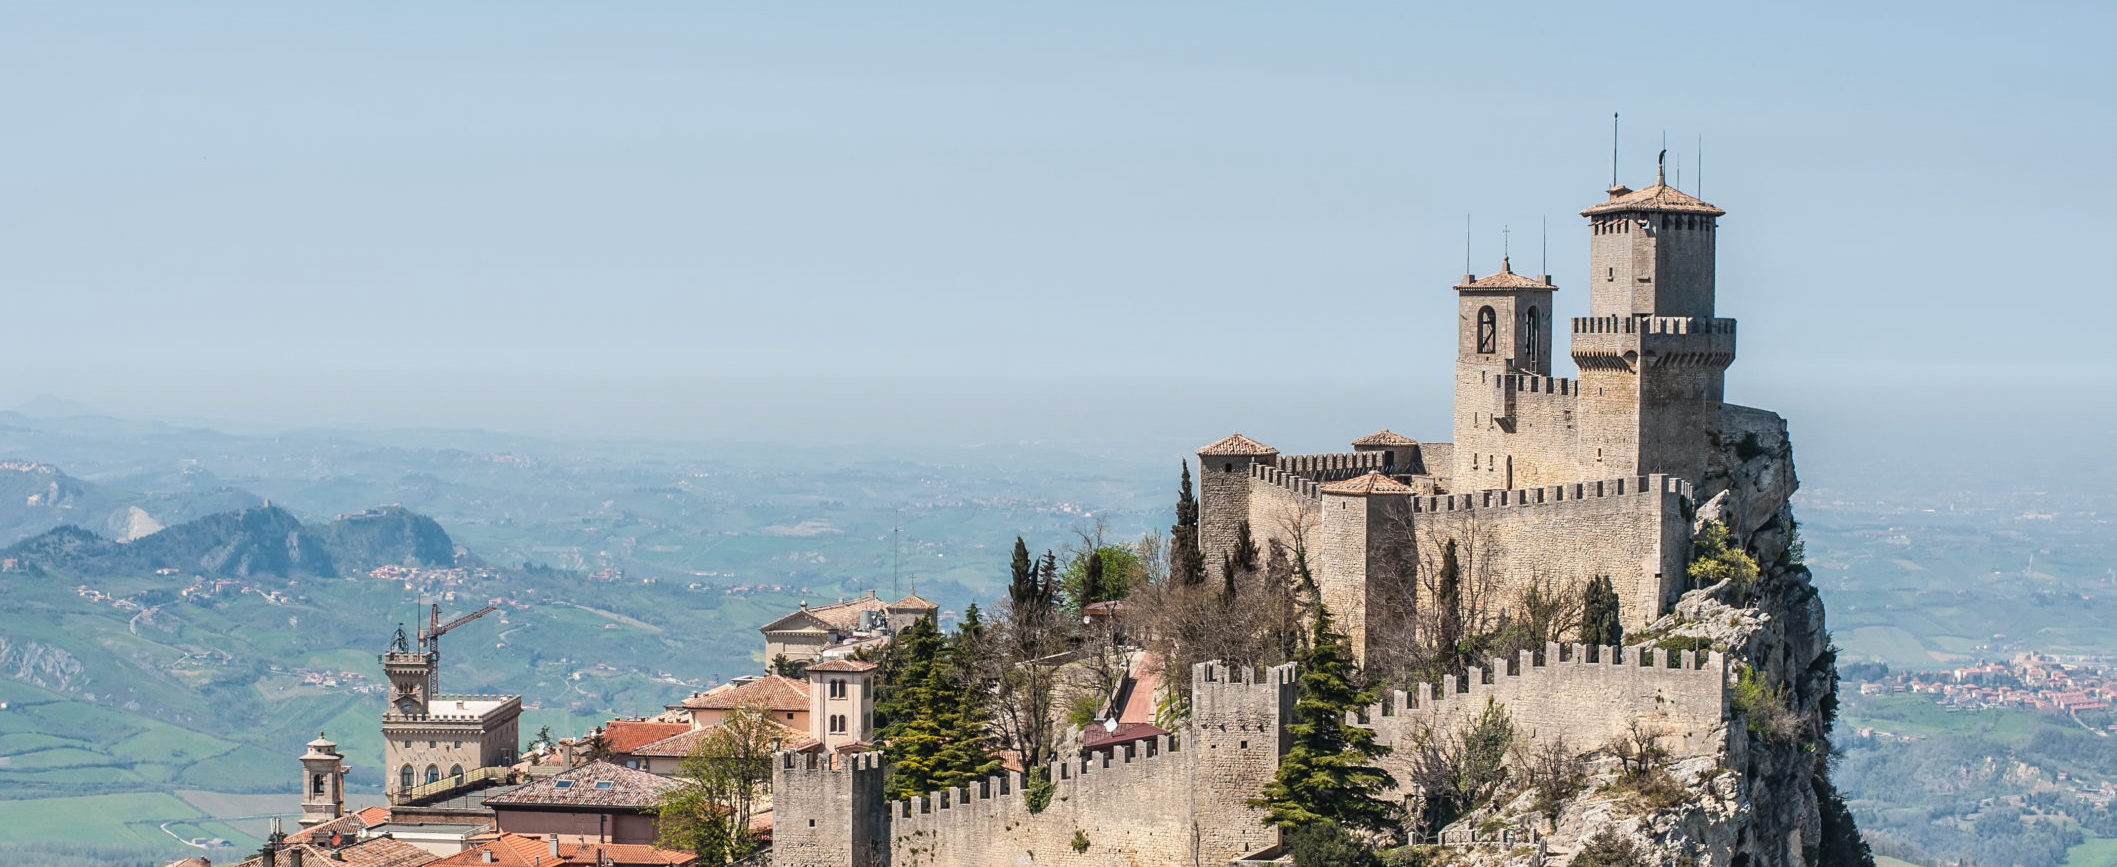 San Marino 2117×1406